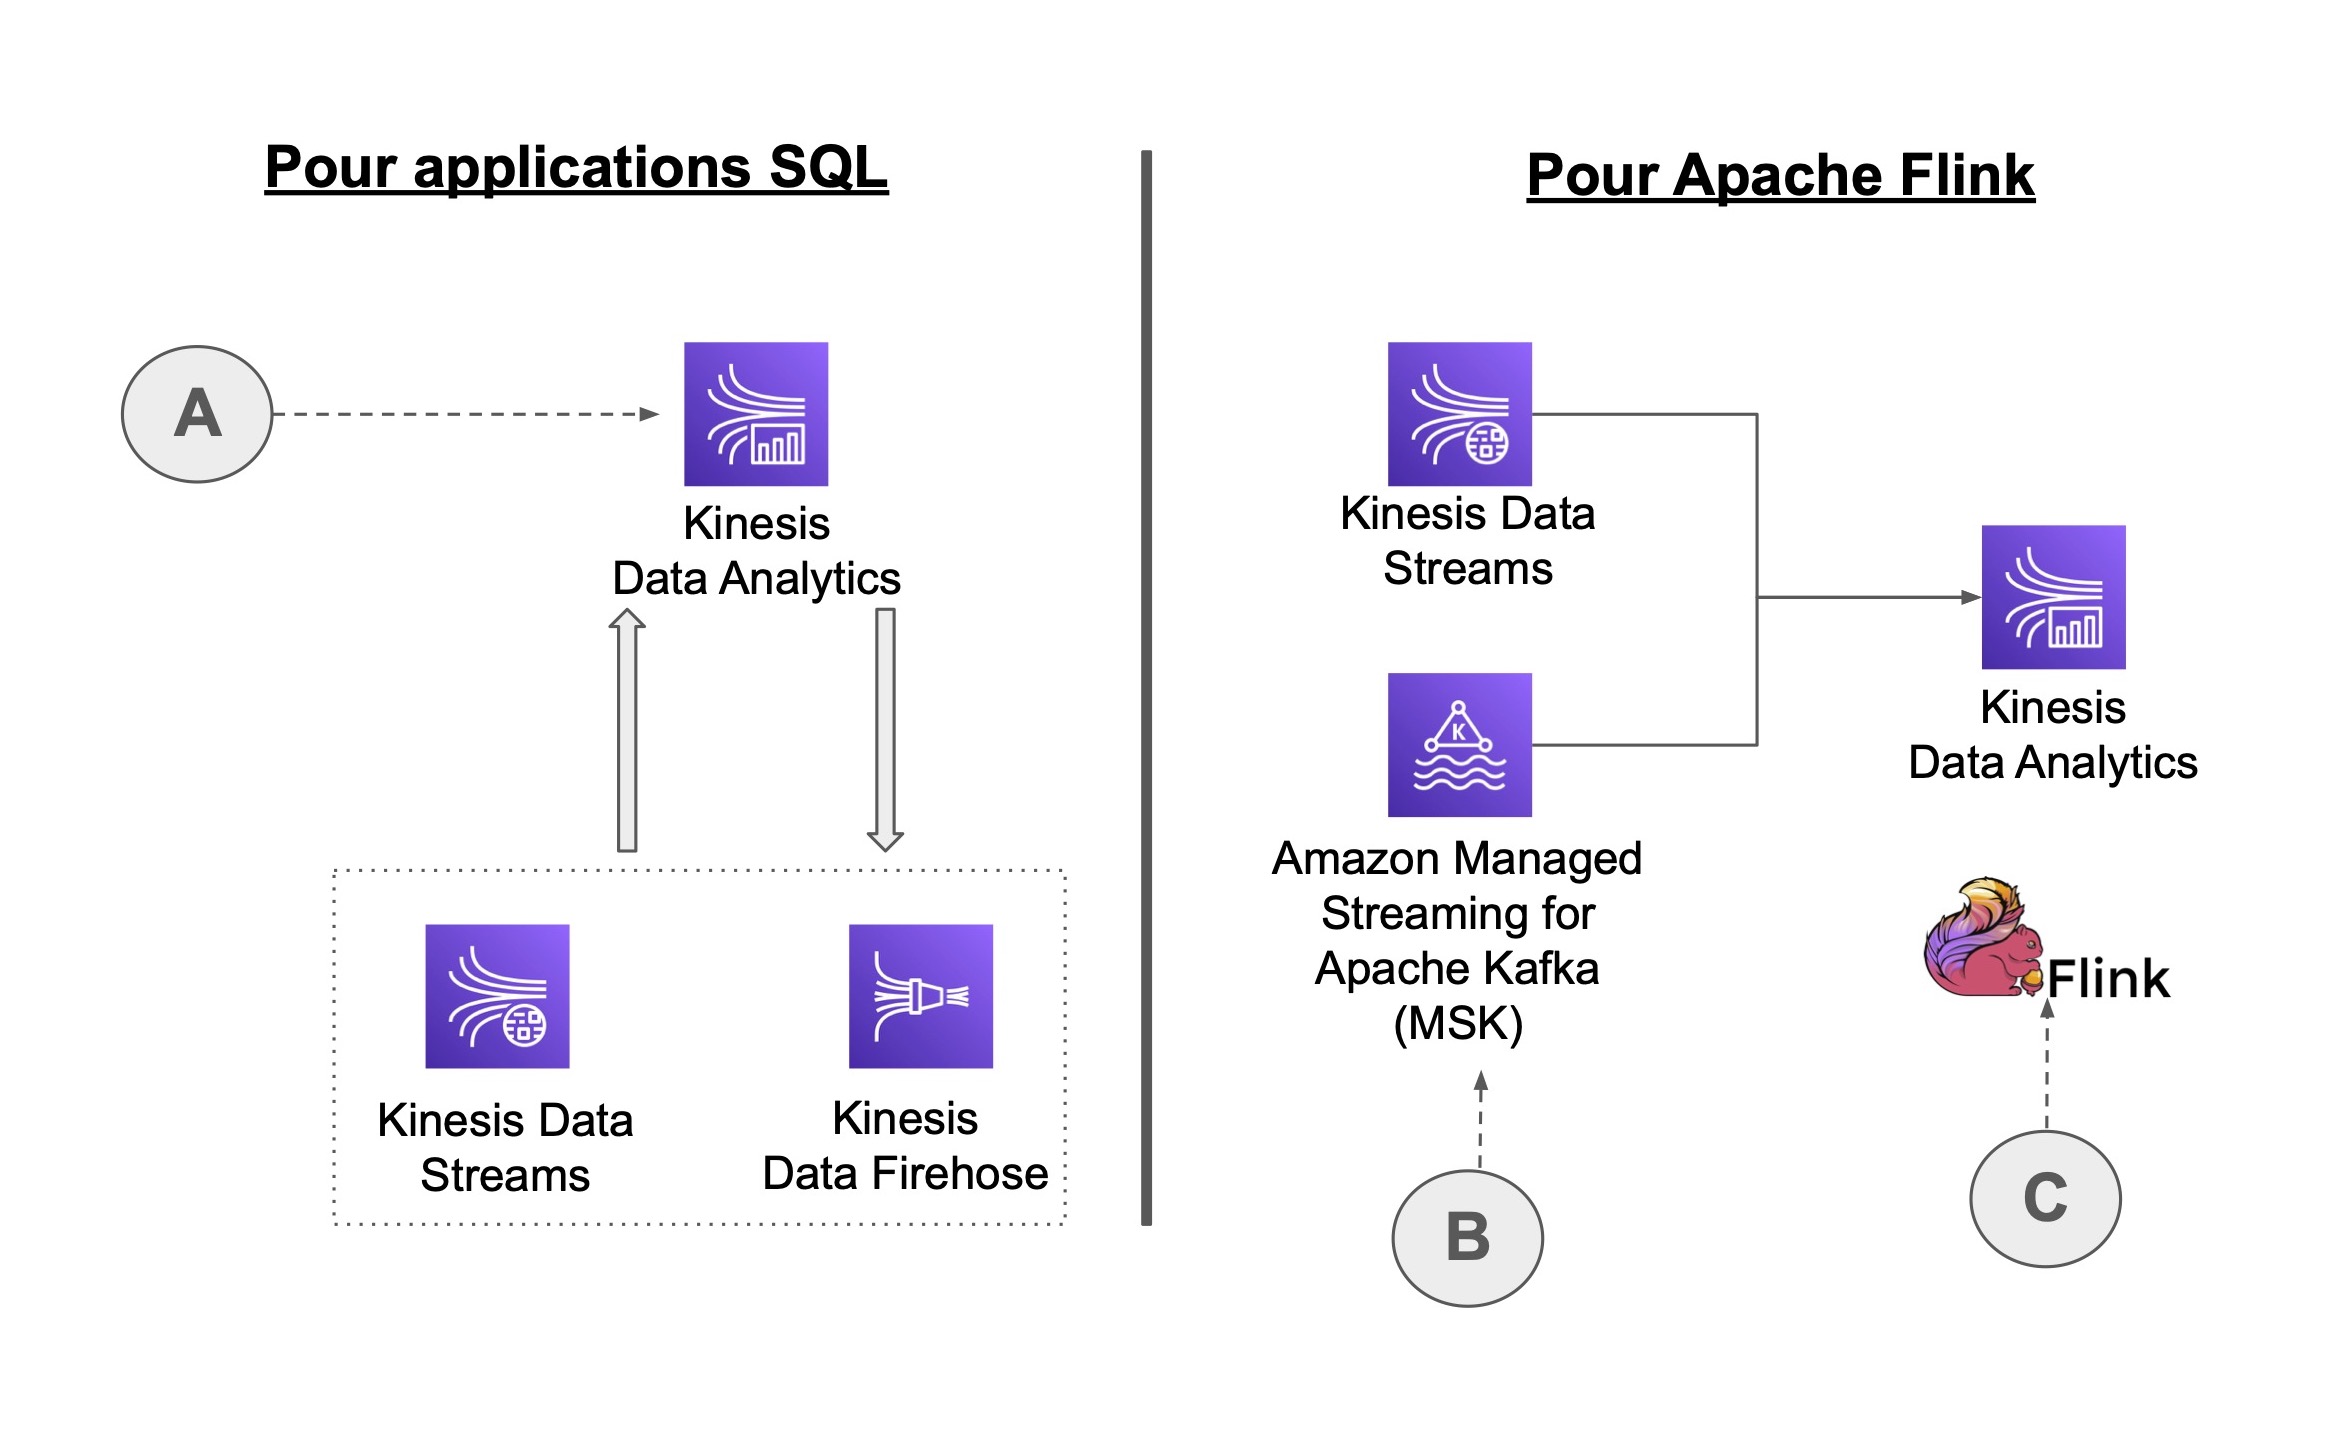 A gauche - pour applications SQL: Kinesis DataAnalytics (A) interagit avec Kinesis Data Streams et Data Firehose. A droite - pour Apache Flink. Deux chemins mènent de Kinesis Data Streams et Amazon Managed Streaming for Apache Kafka (B) vers Kinesis Data